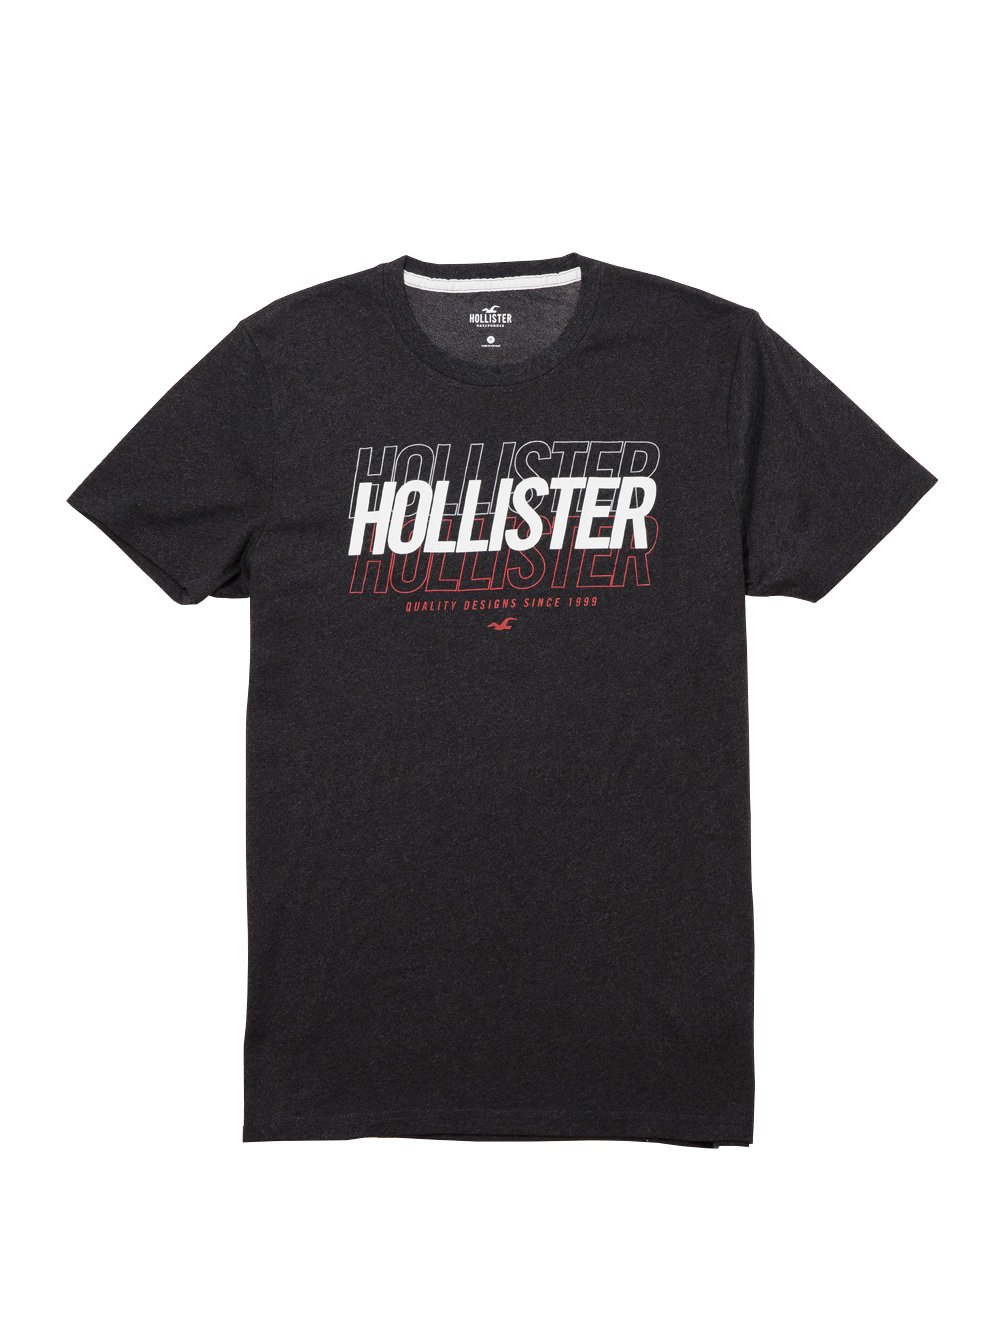 Camiseta Hollister Masculina Must-Have Floral Preta - Preto